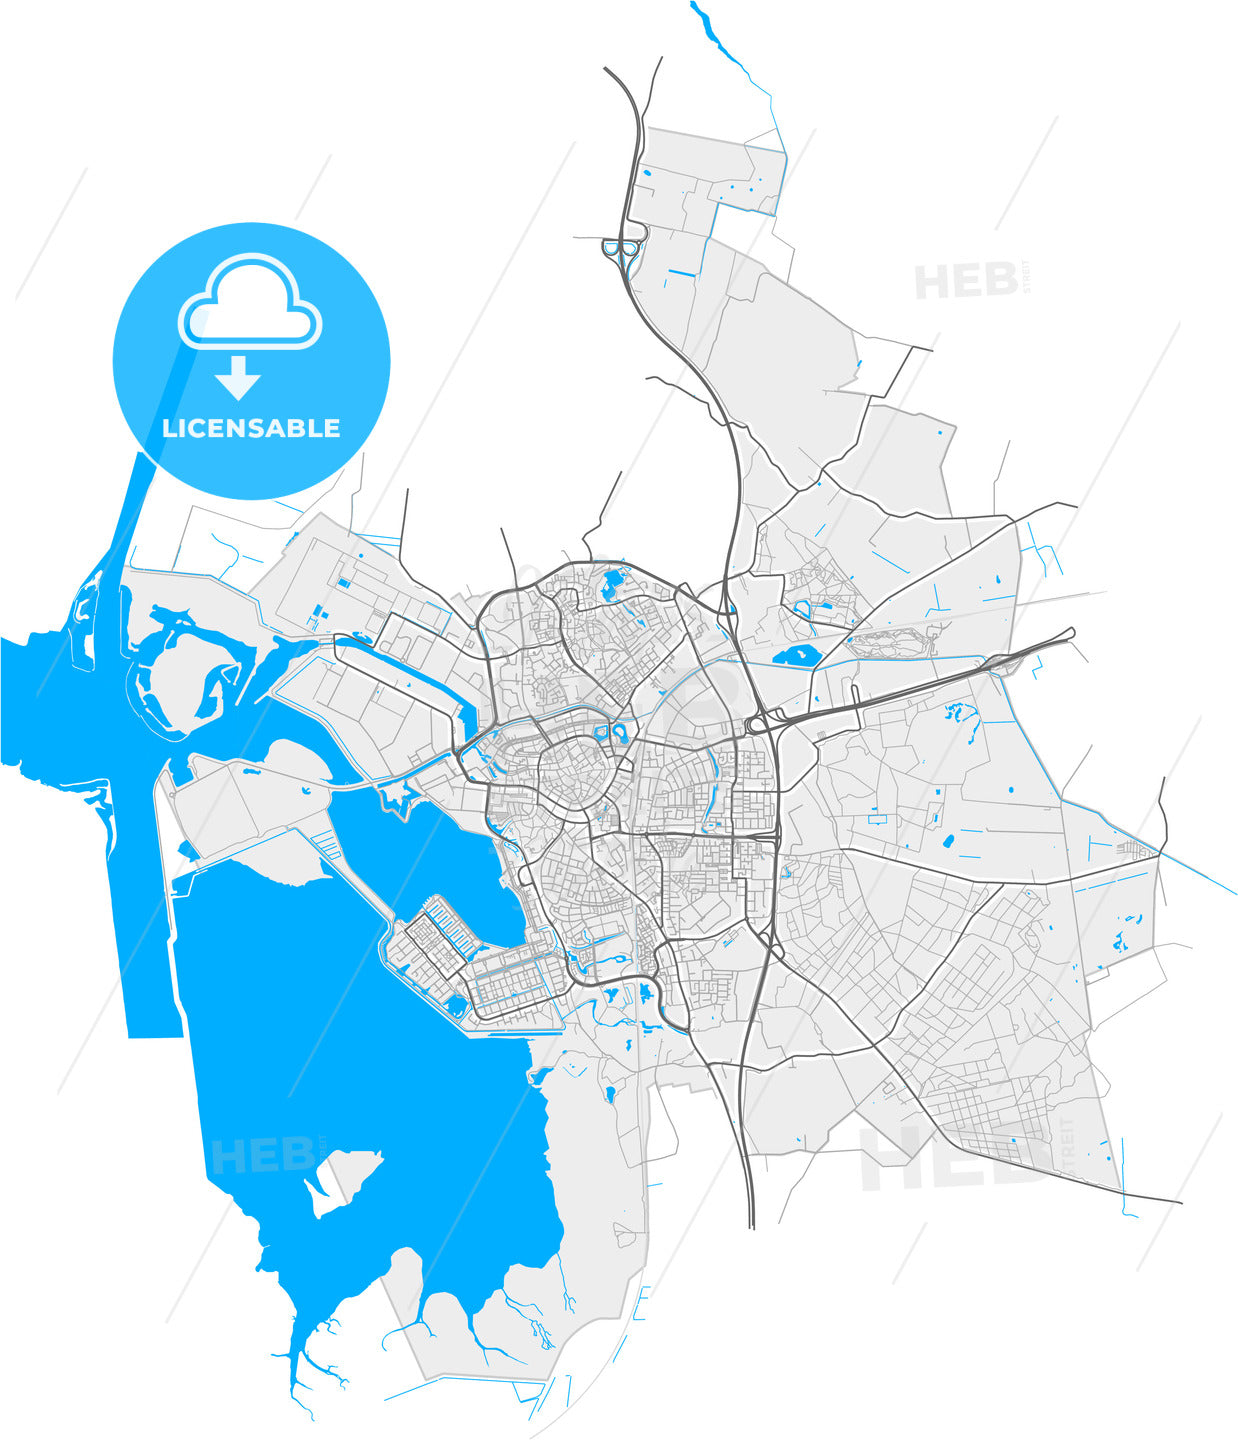 Bergen op Zoom, North Brabant, Netherlands, high quality vector map